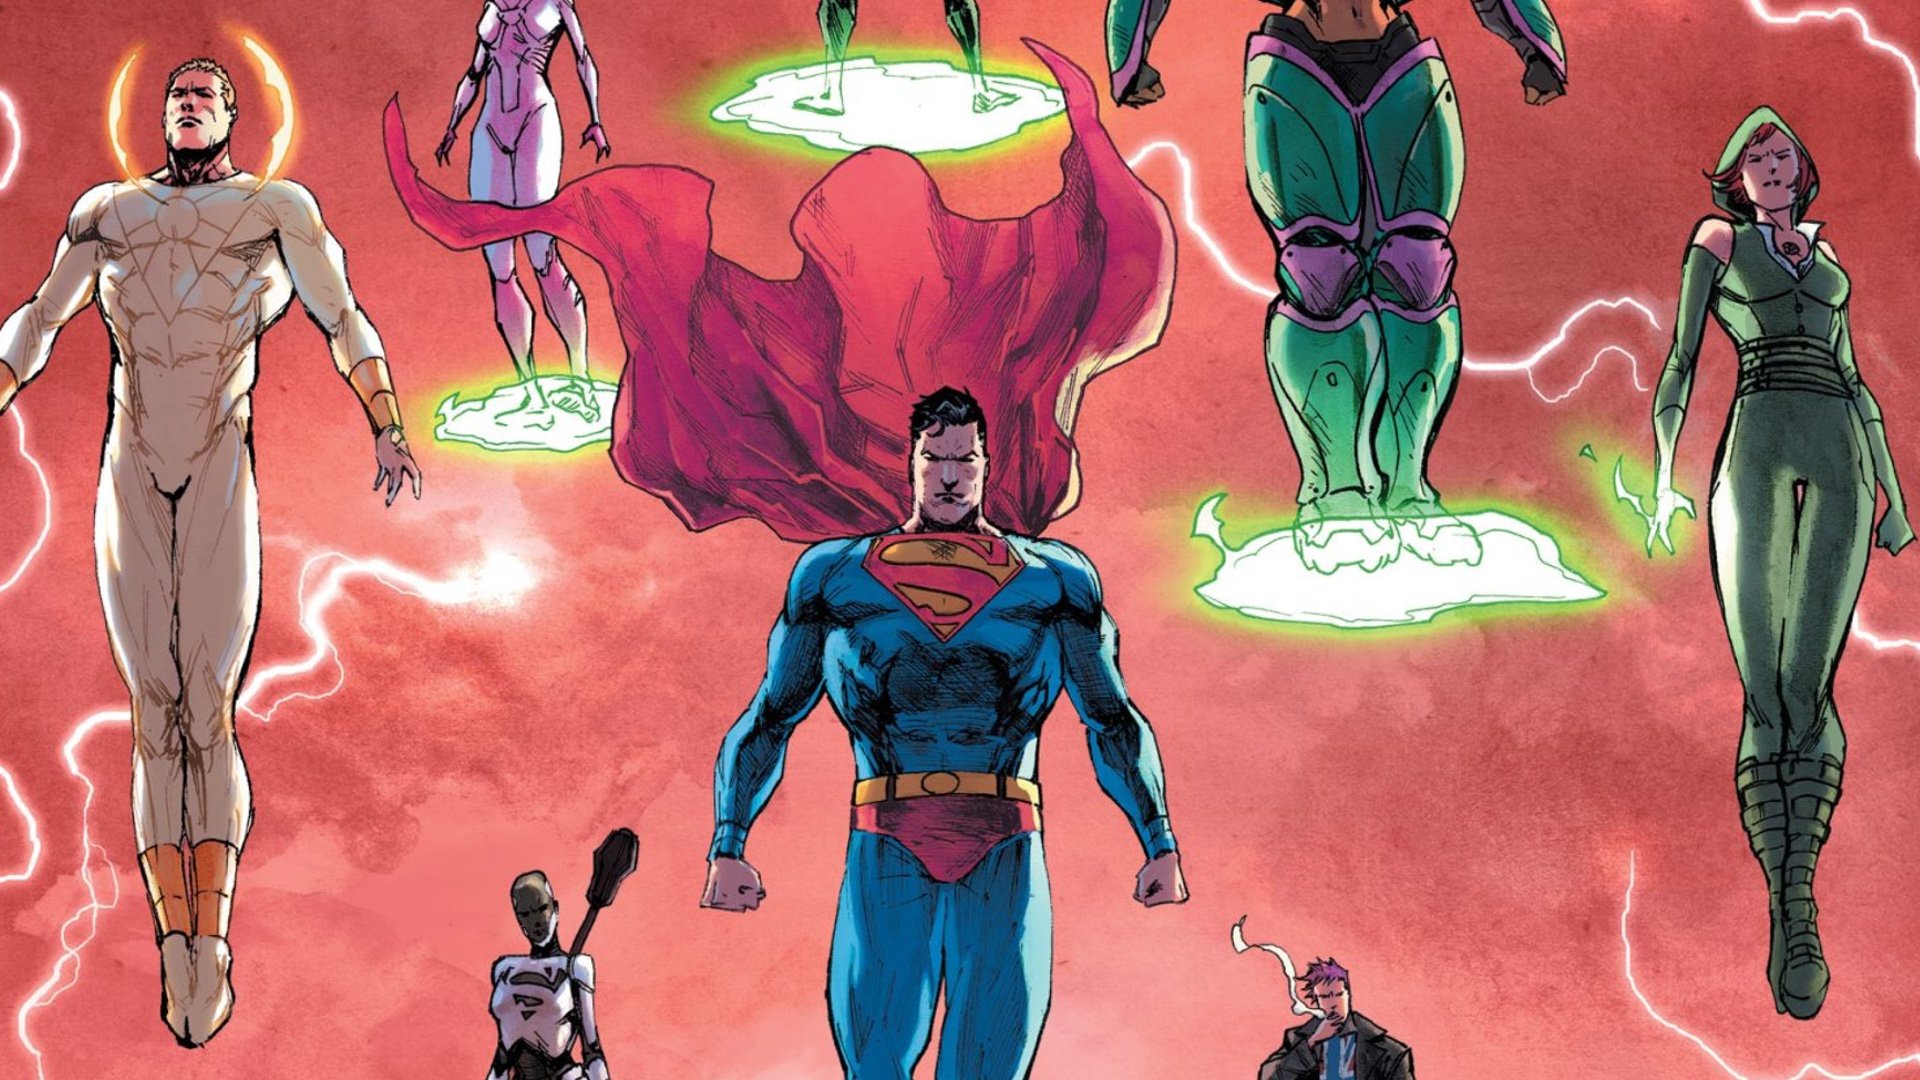 dc-superheroes-smallville-s-superman-fought-who-won.jpg